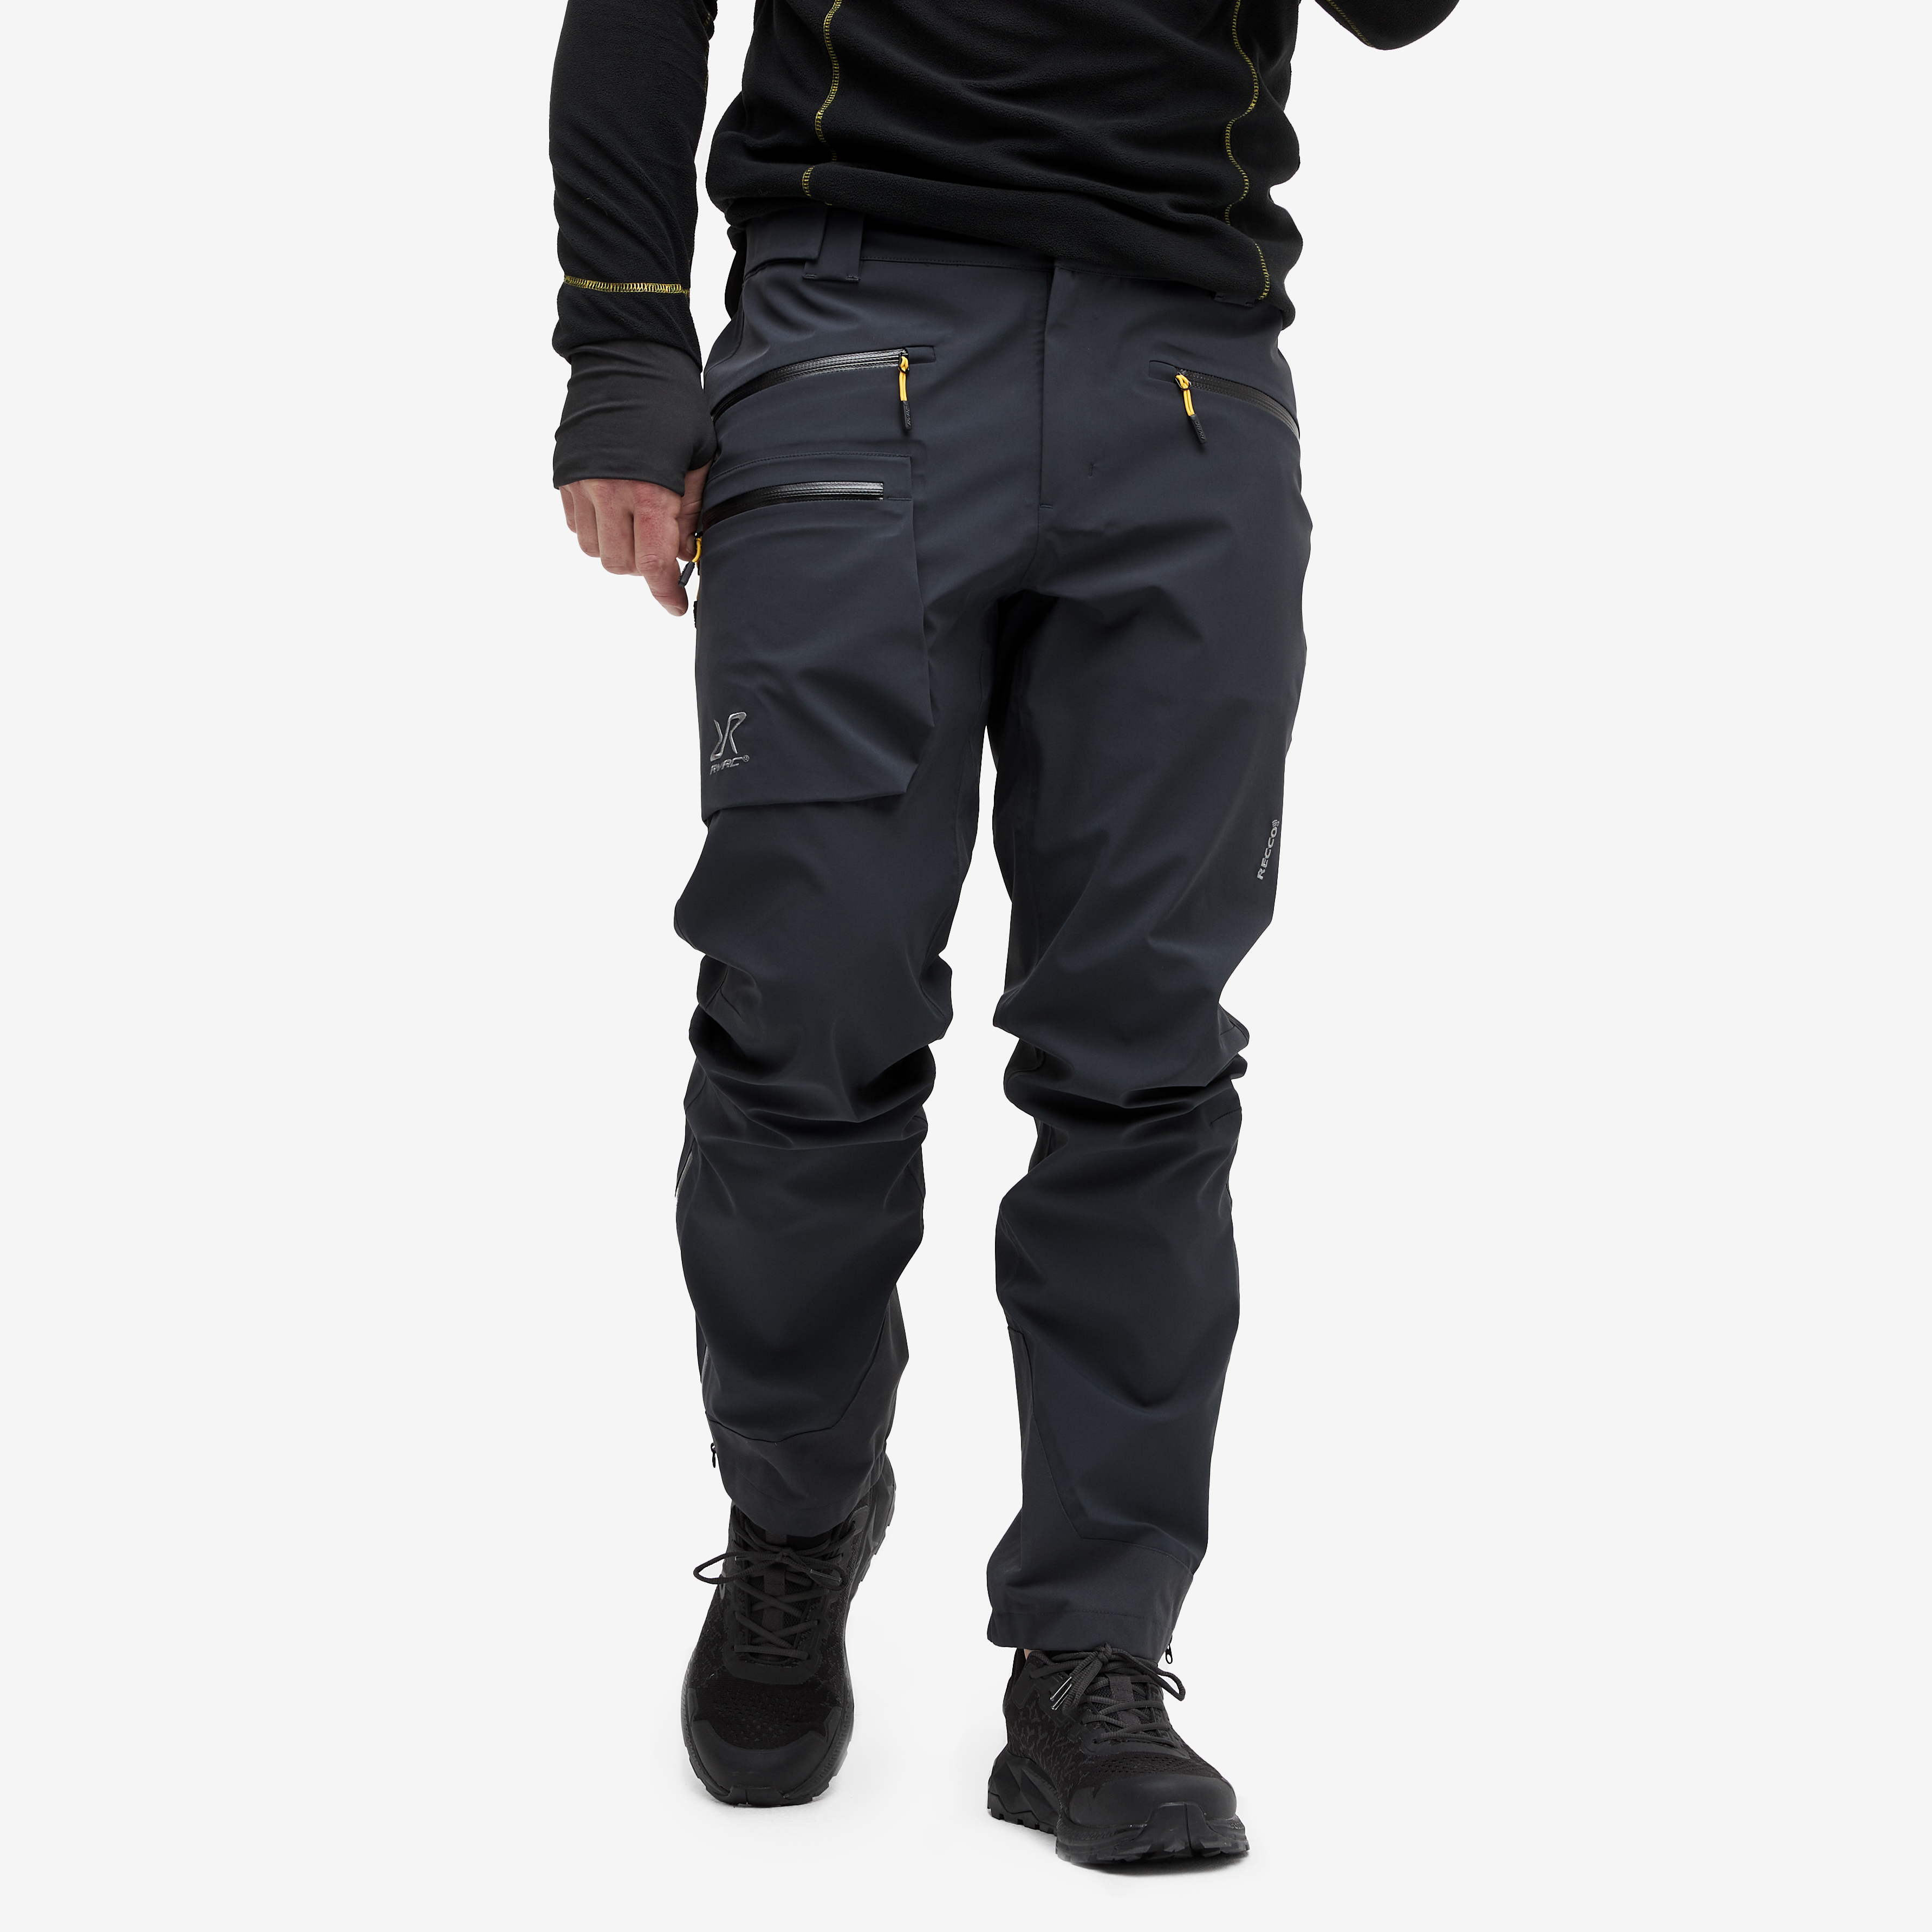 Aphex Pro Pants Charcoal Black Miehet